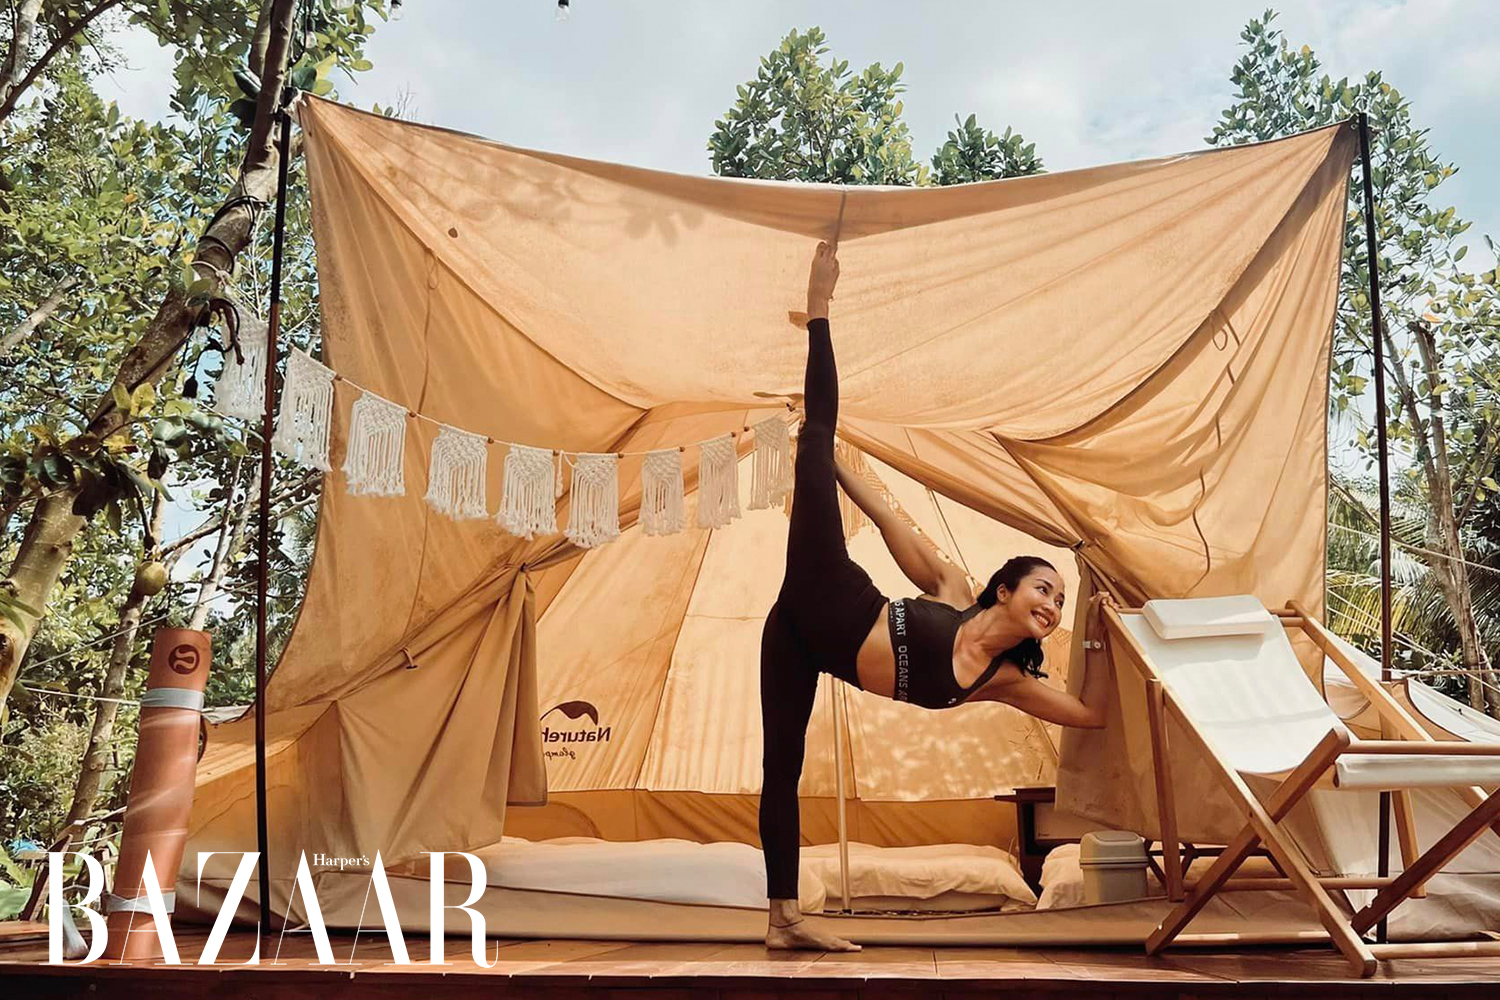 Harper's Bazaar_tập yoga thiền ngoài trời_03